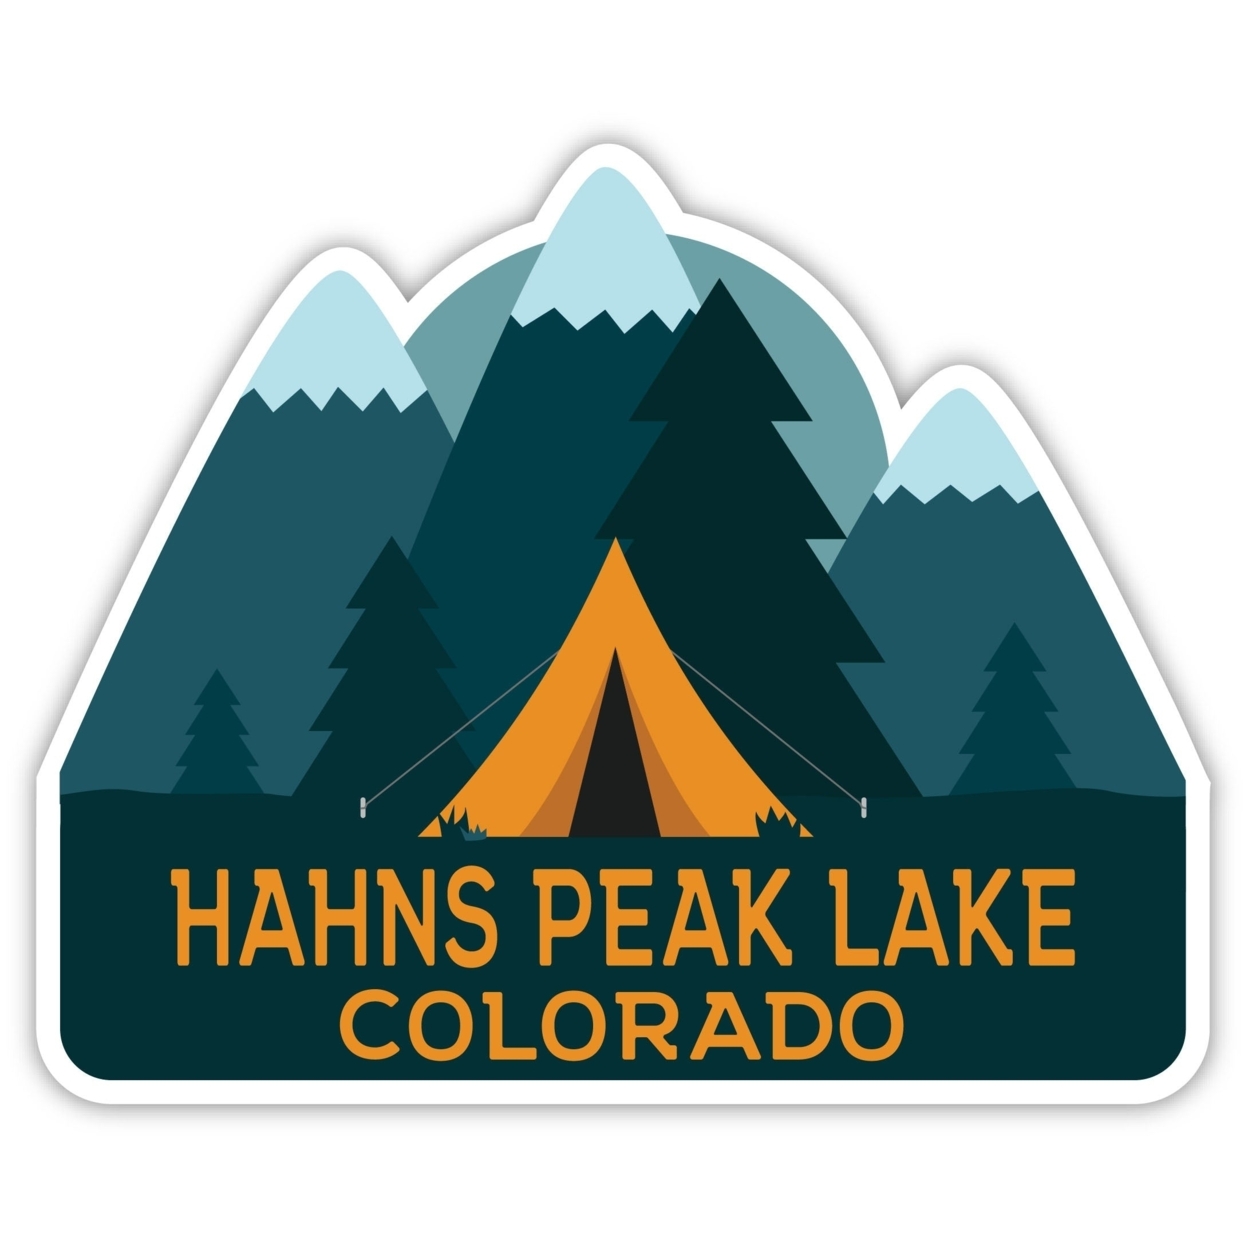 Hahns Peak Lake Colorado Souvenir Decorative Stickers (Choose Theme And Size) - Single Unit, 12-Inch, Tent